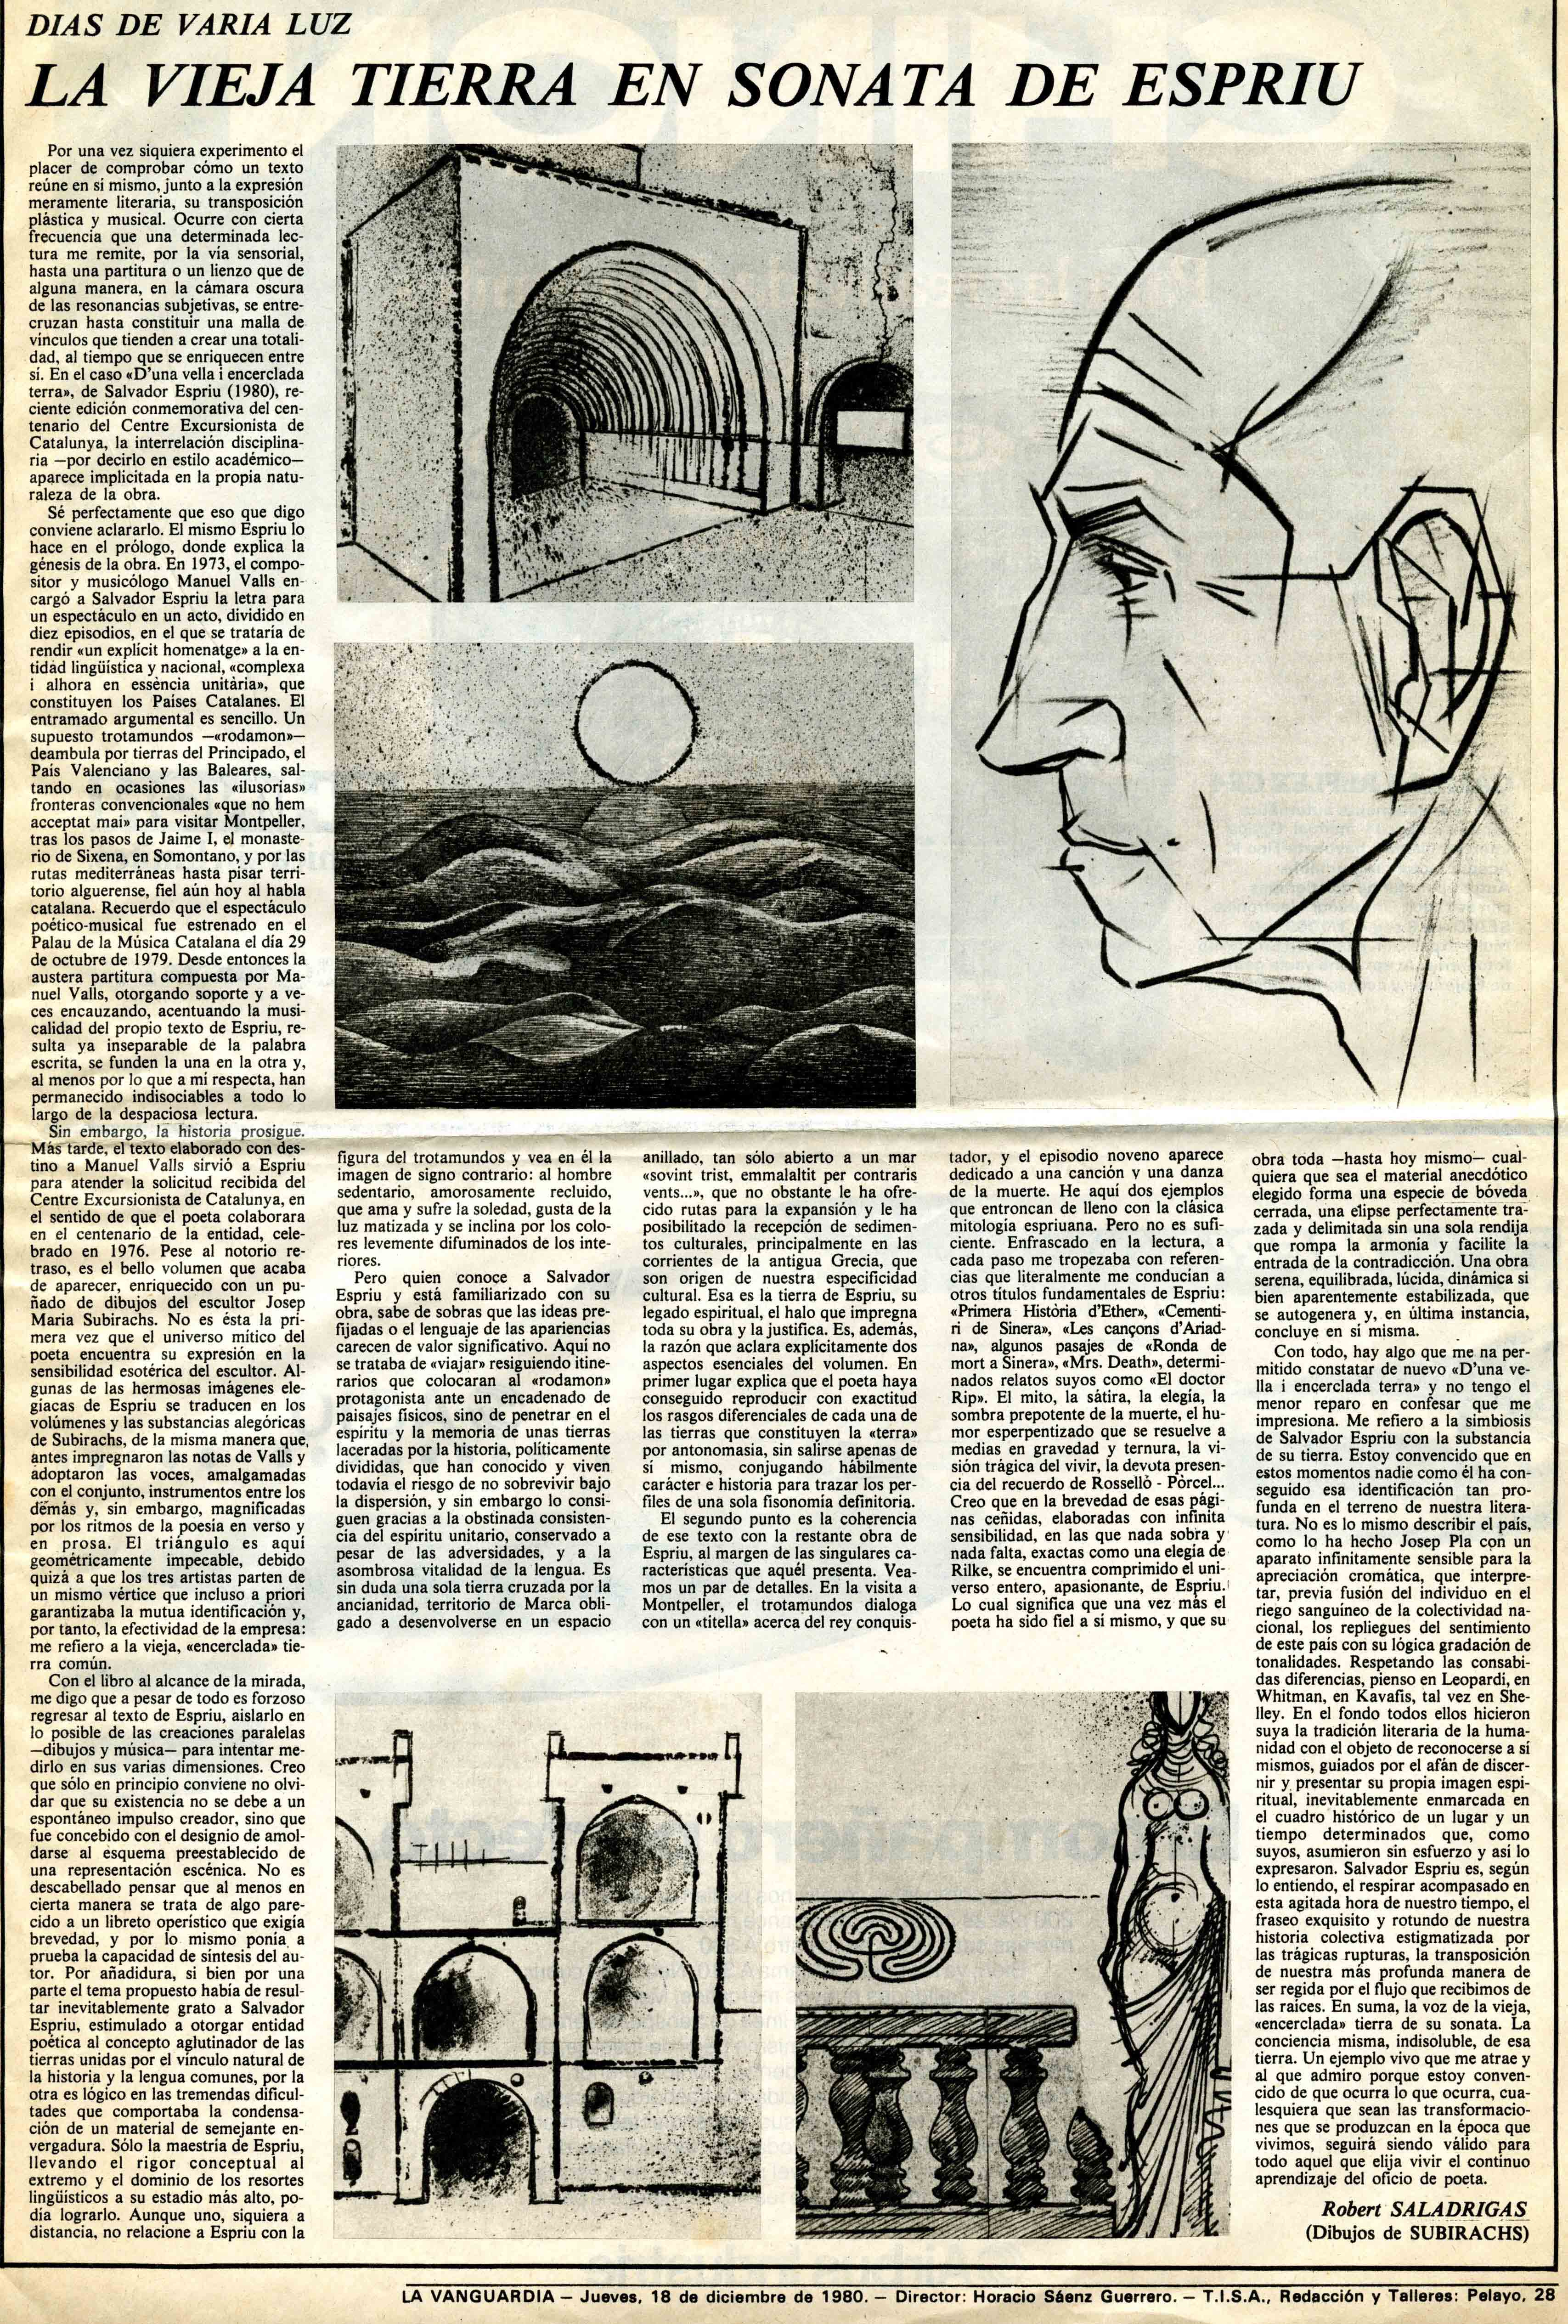 Saladrigas, Robert. La vieja tierra en sonata de Espriu. La Vanguardia, 18/12/1980